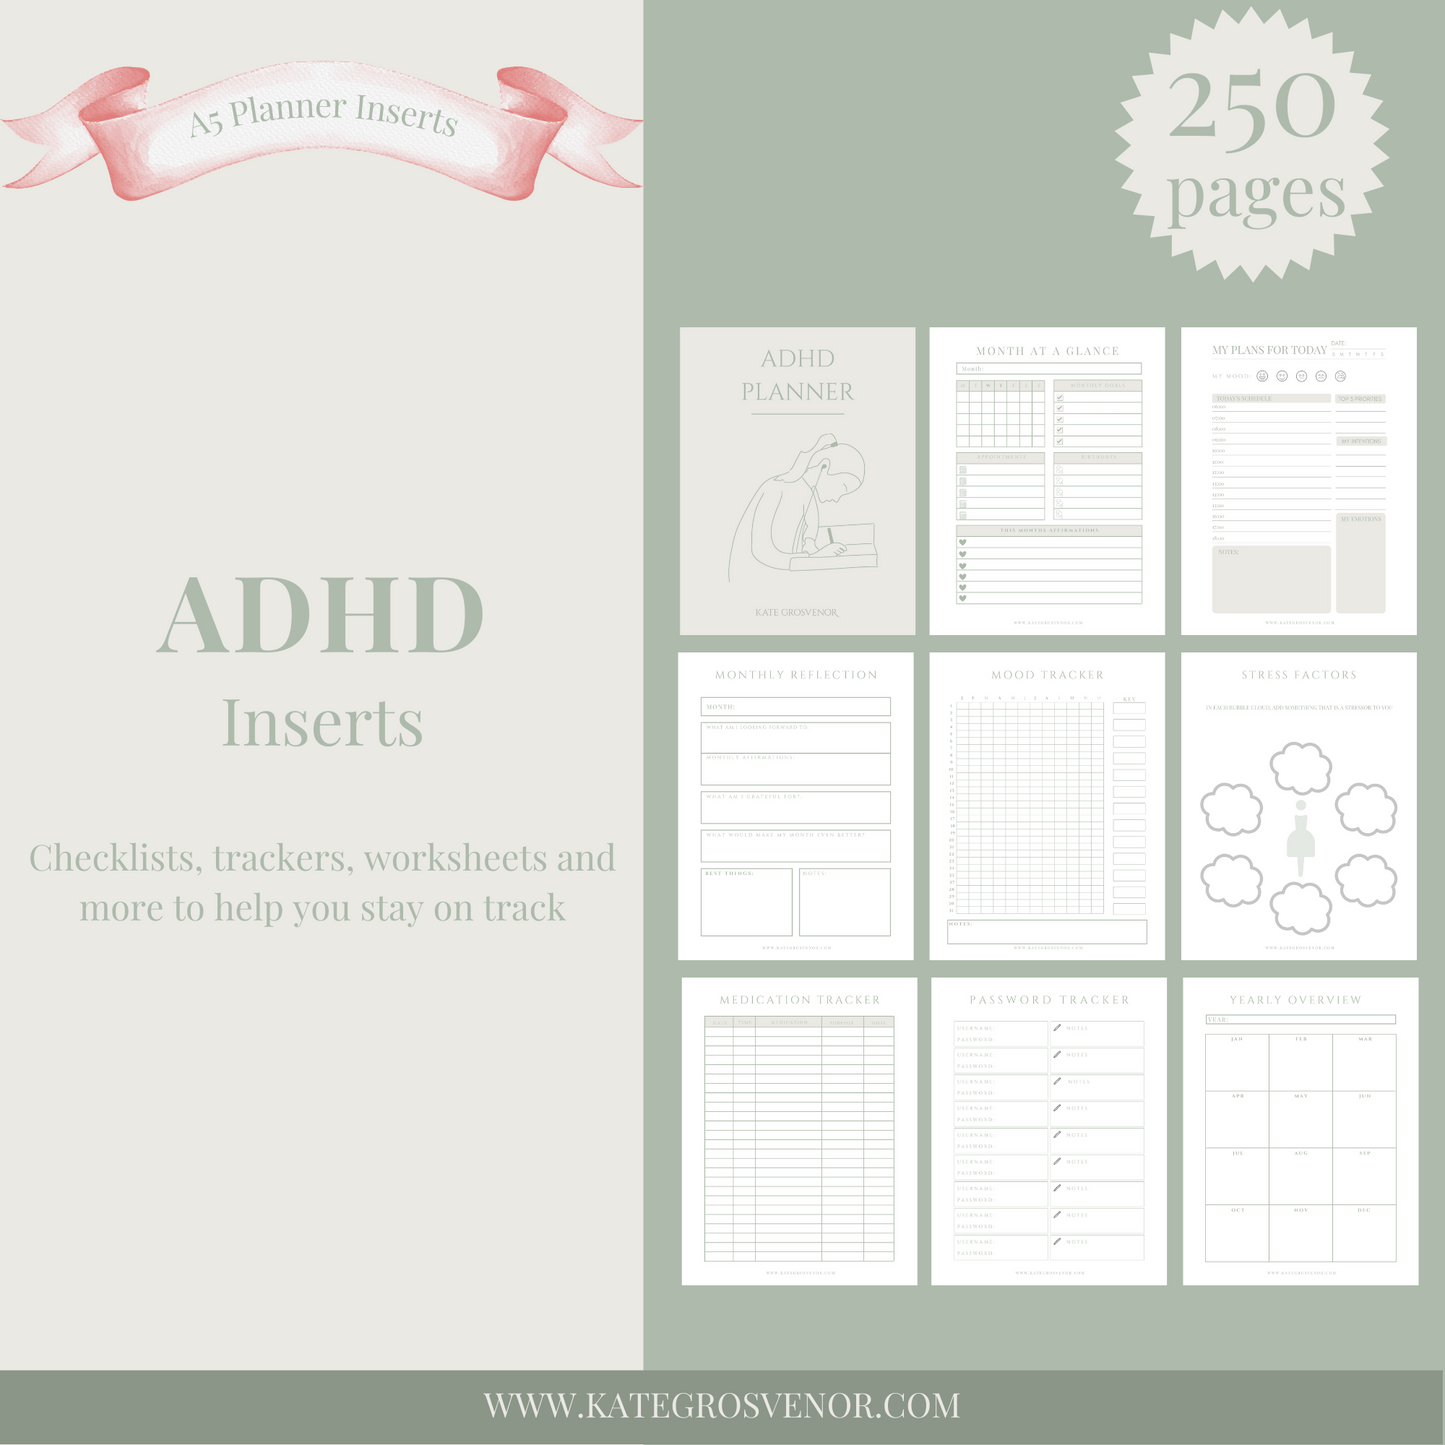 ADHD Planner Insert